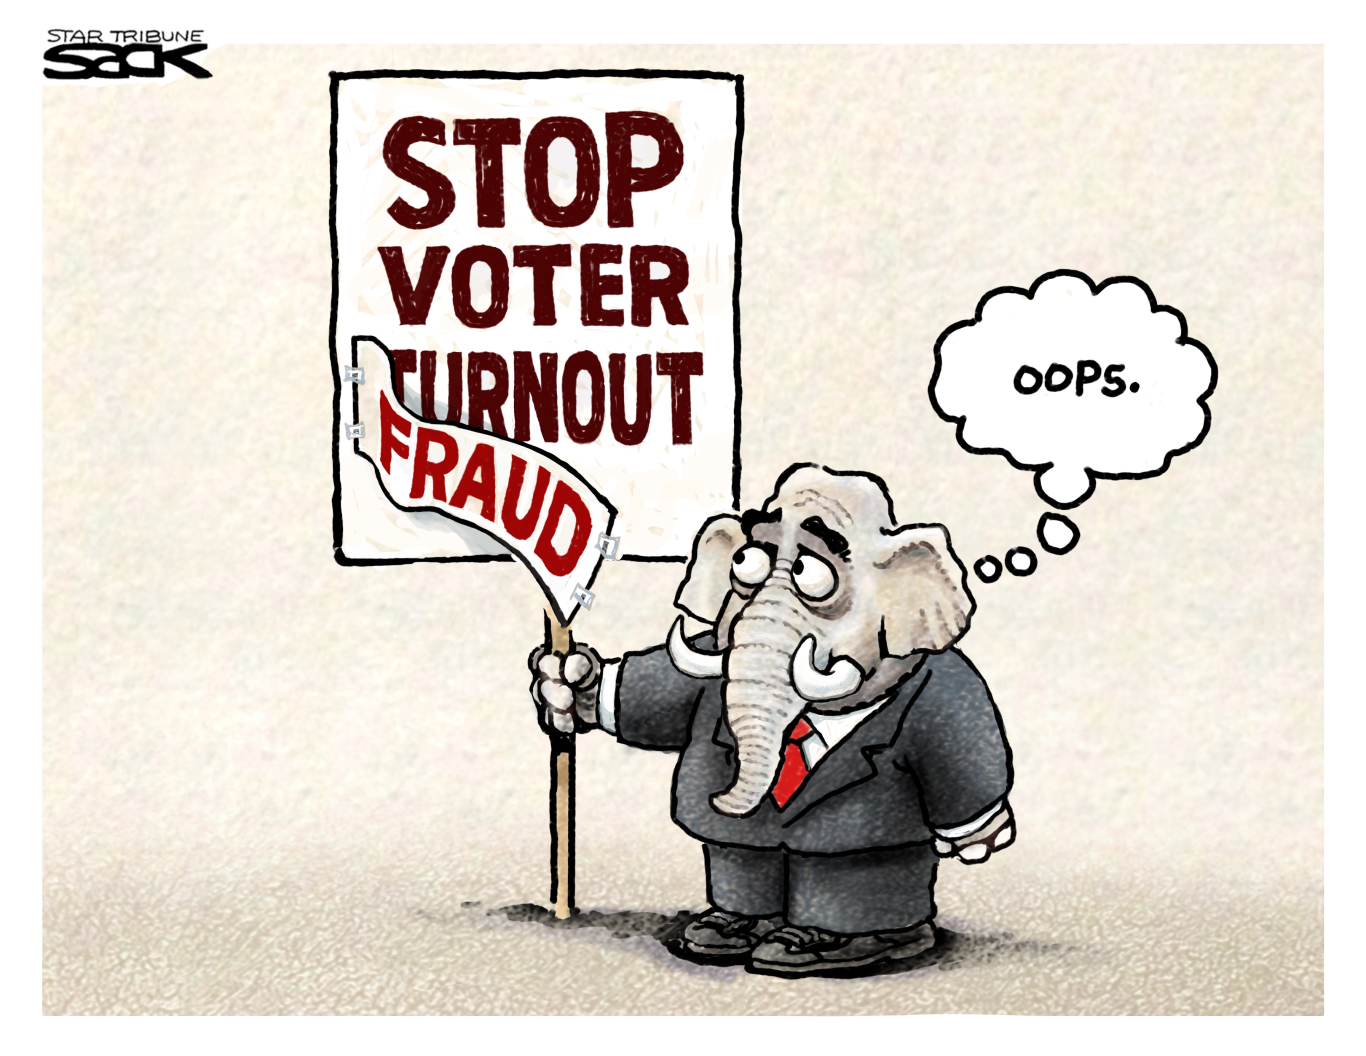 Republicans tell the Big Lie to pass voter suppression bills.